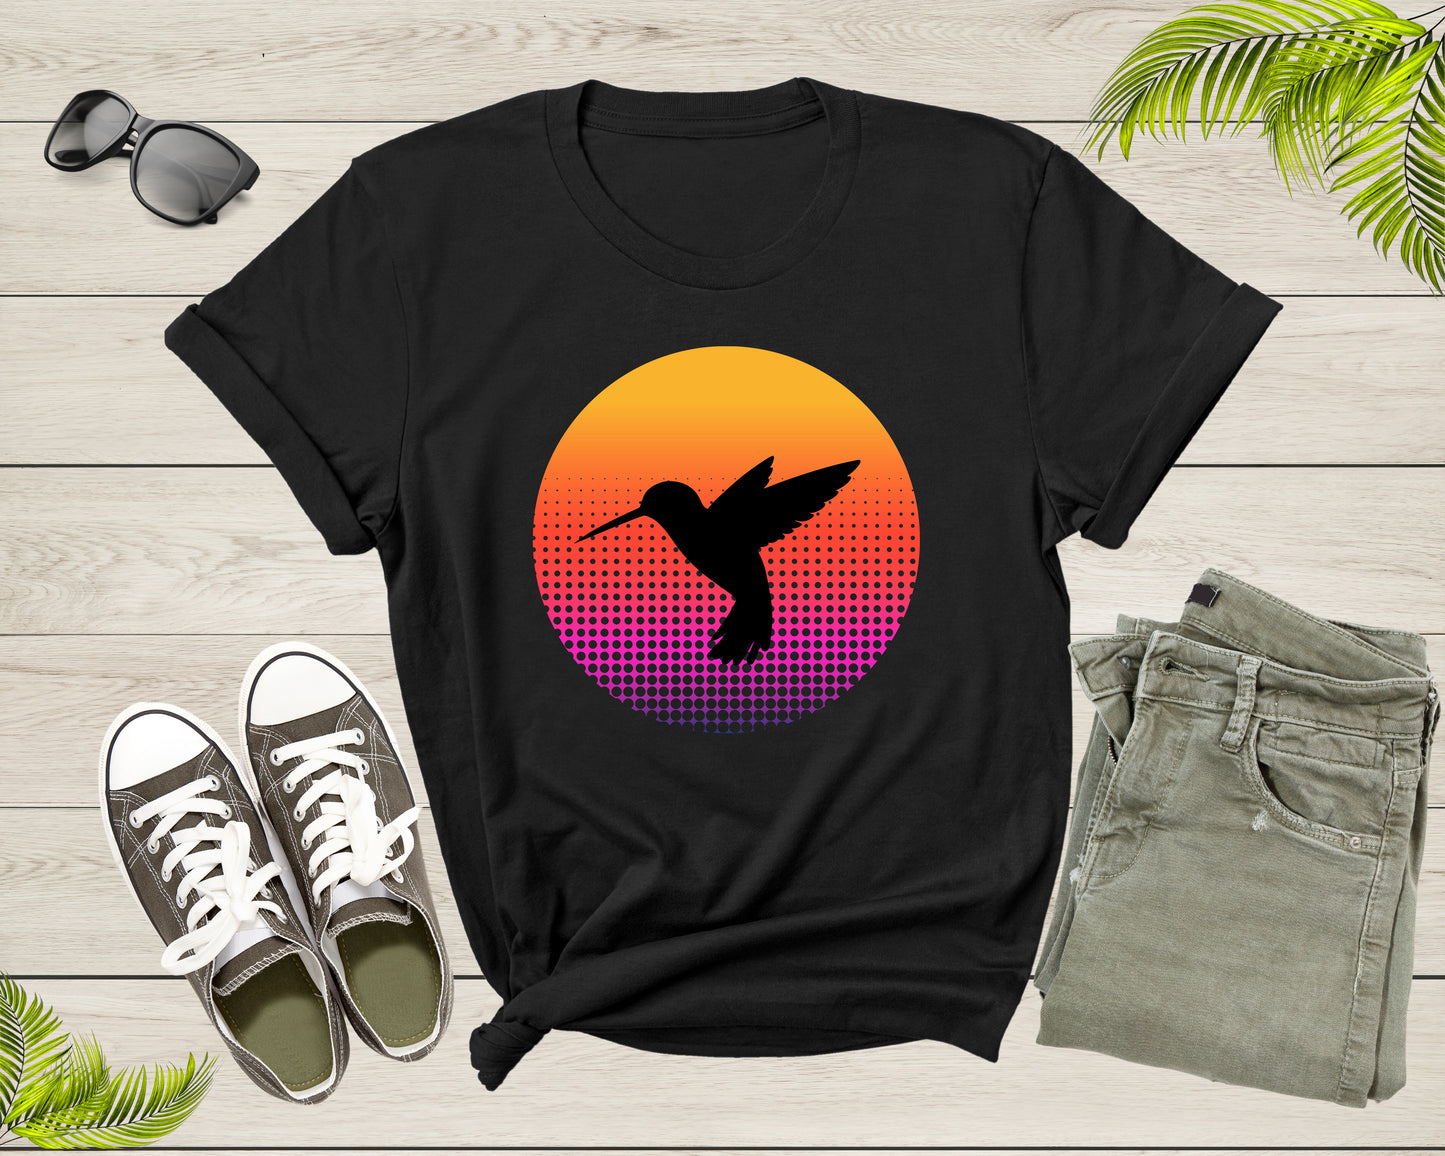 Retro Hummingbird Bird Lover Gift Shirt For Men Women Kids Ladies Boys Girls Hummingbird Gifts For Mom Dad Tshirt Cute Bird Graphic T-shirt